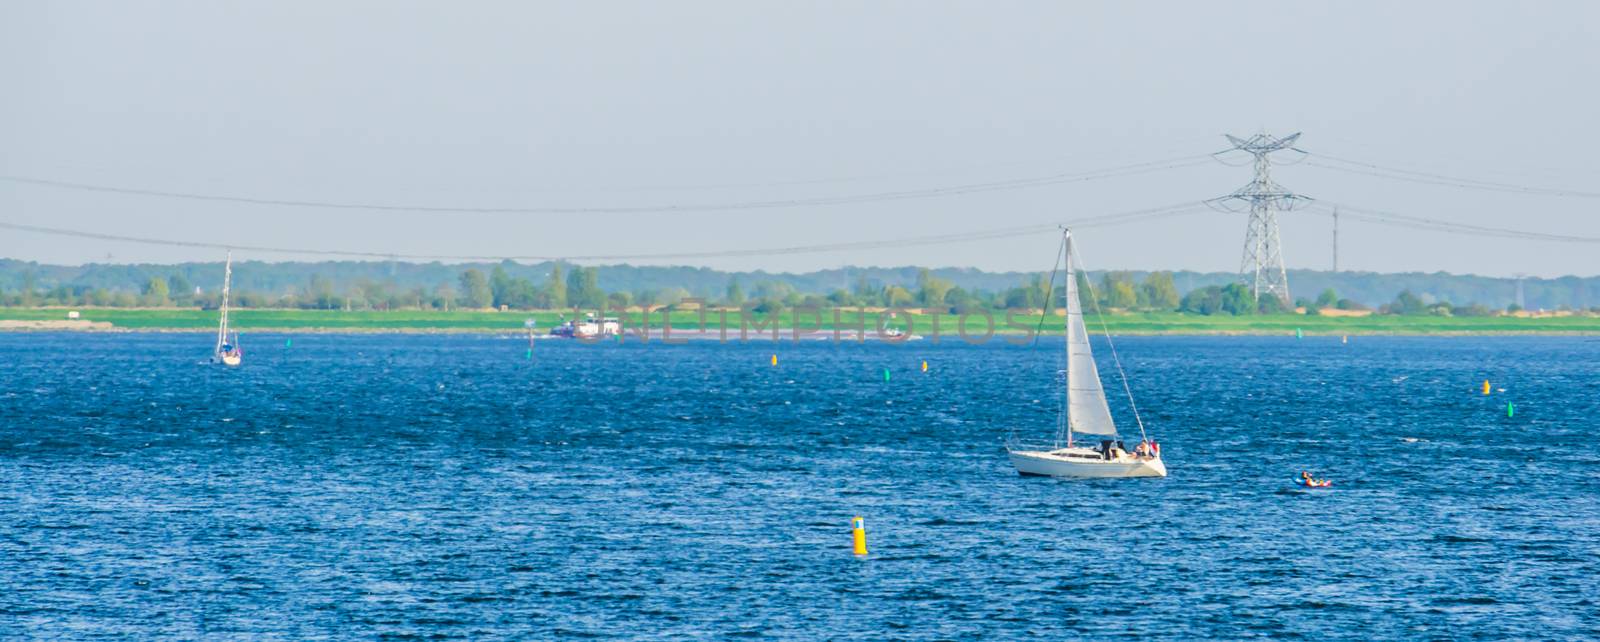 Boat sailing in the ocean of the Oosterschelde in Tholen city, Bergse diepsluis, Zeeland, The netherlands by charlottebleijenberg